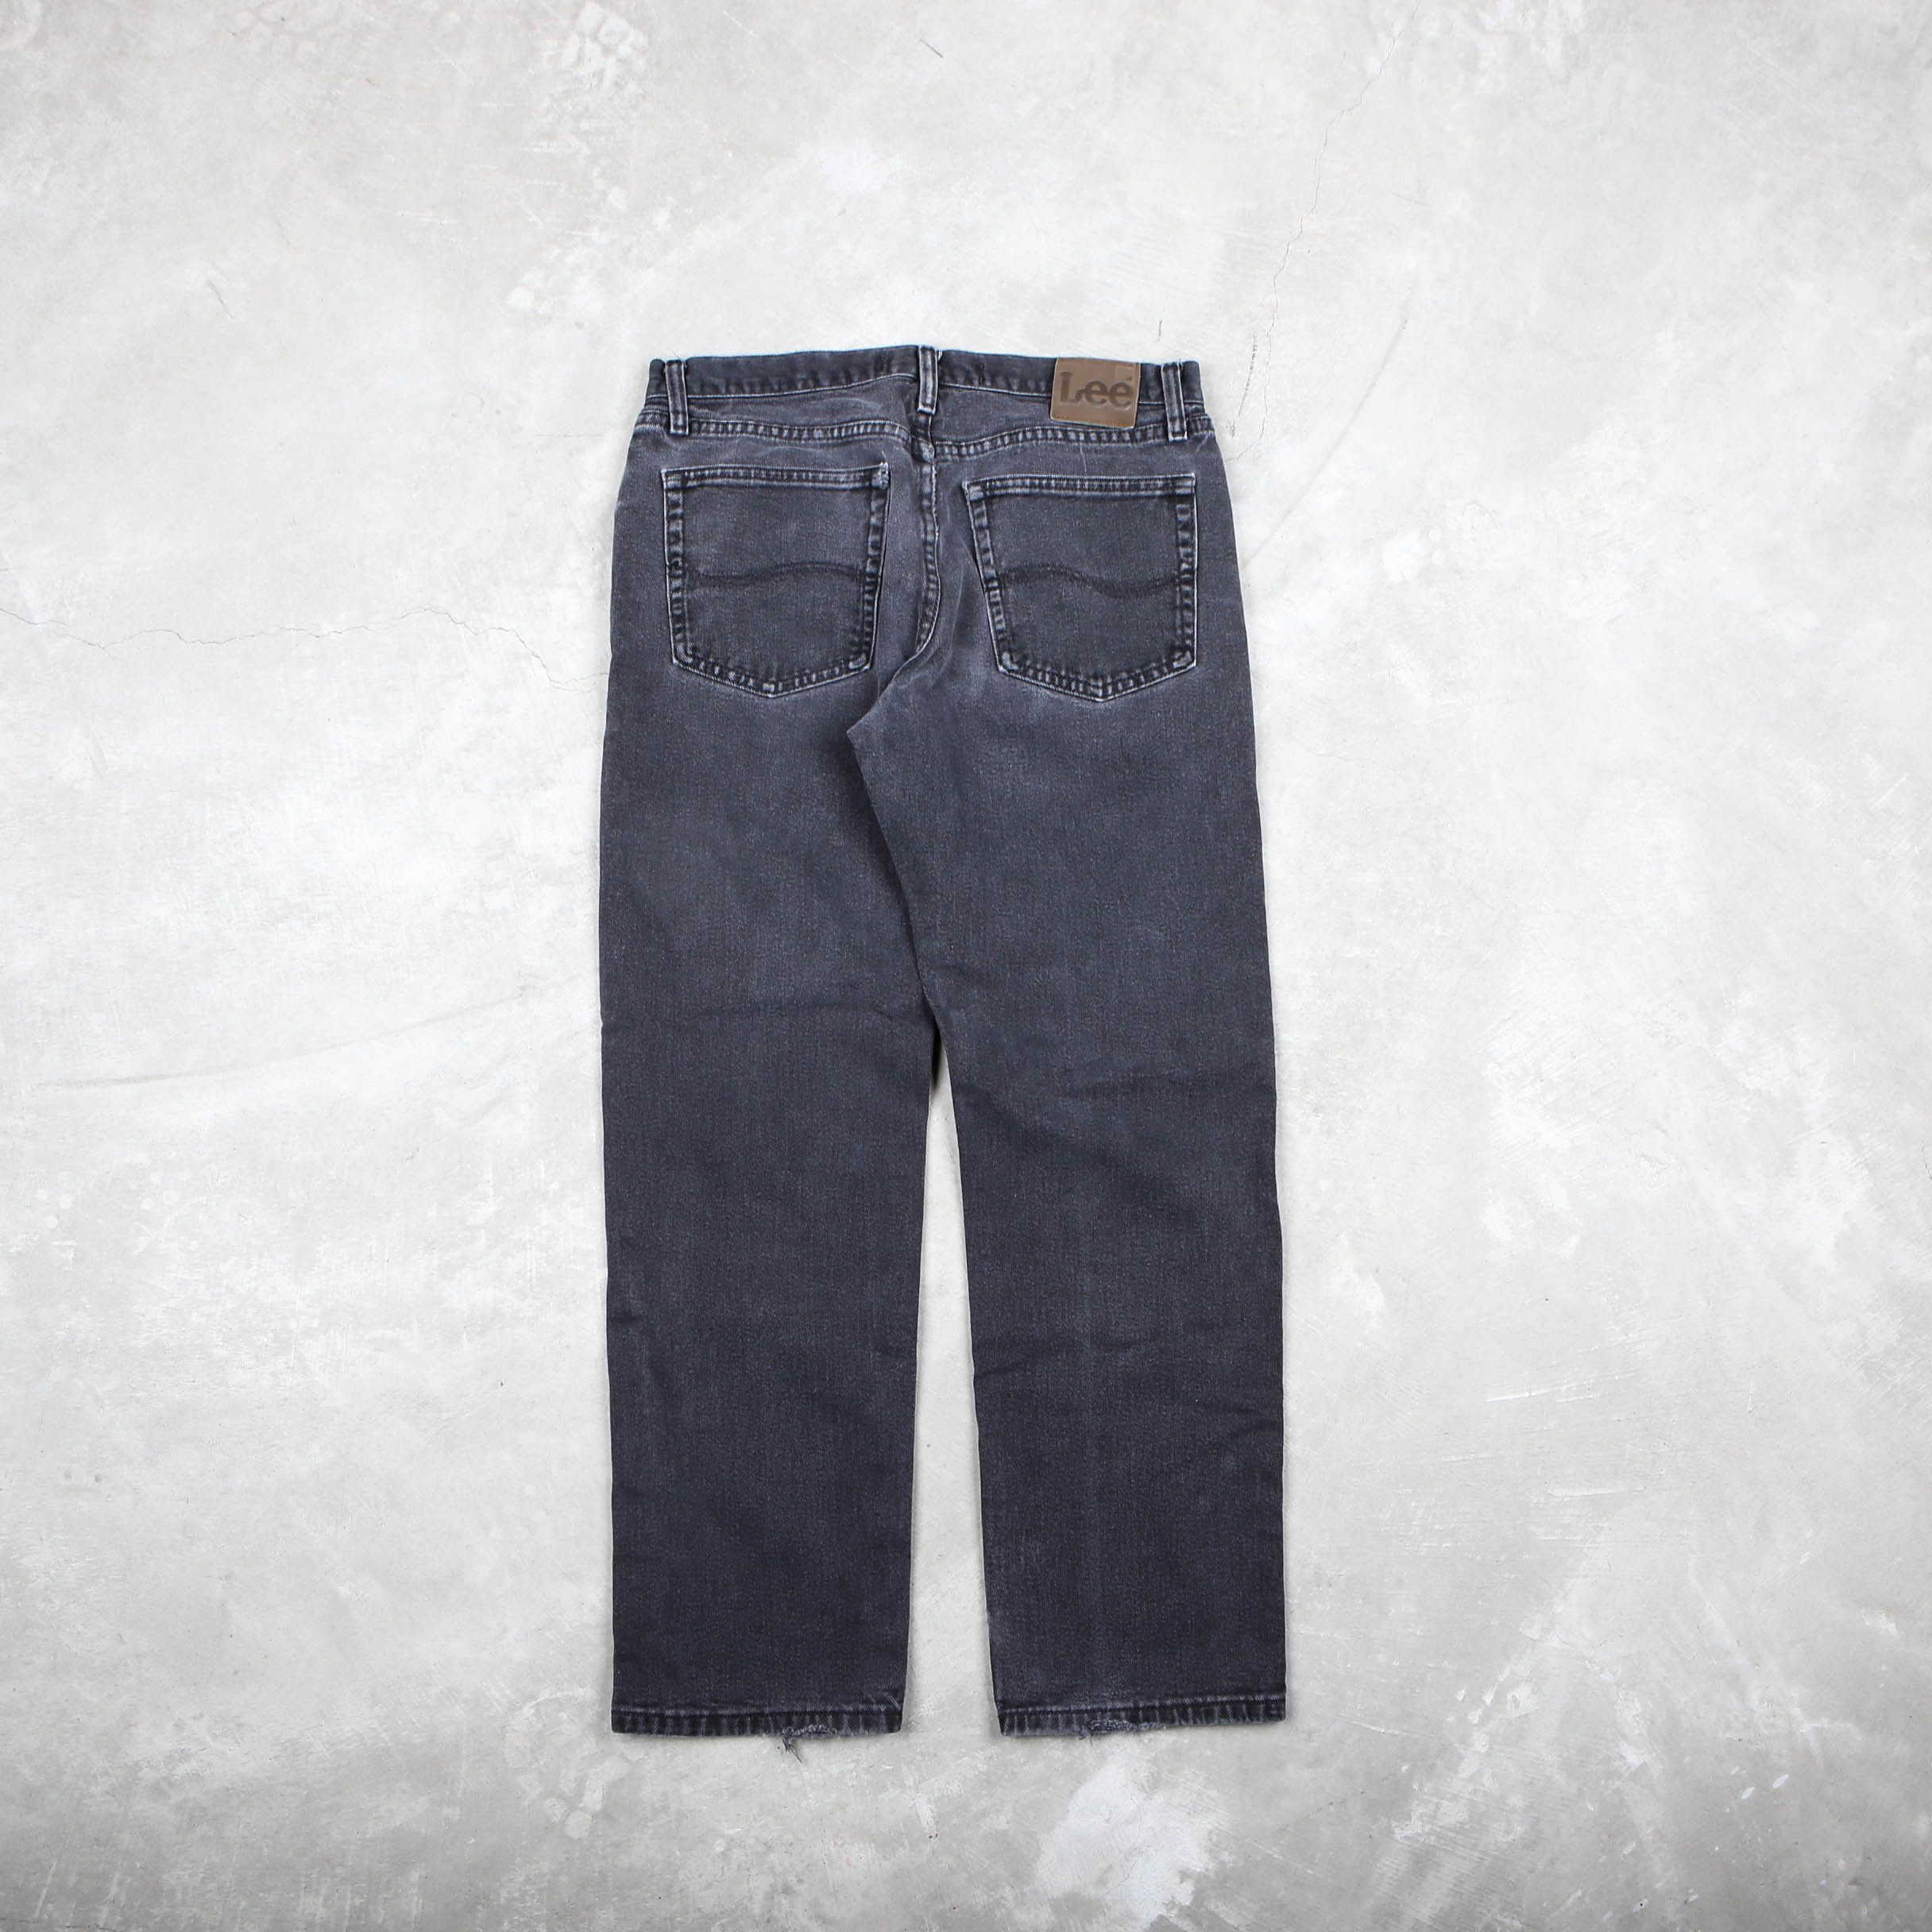 Vintage Vintage Lee's Denim Faded Jeans 33 Late 90s Size US 33 - 8 Thumbnail